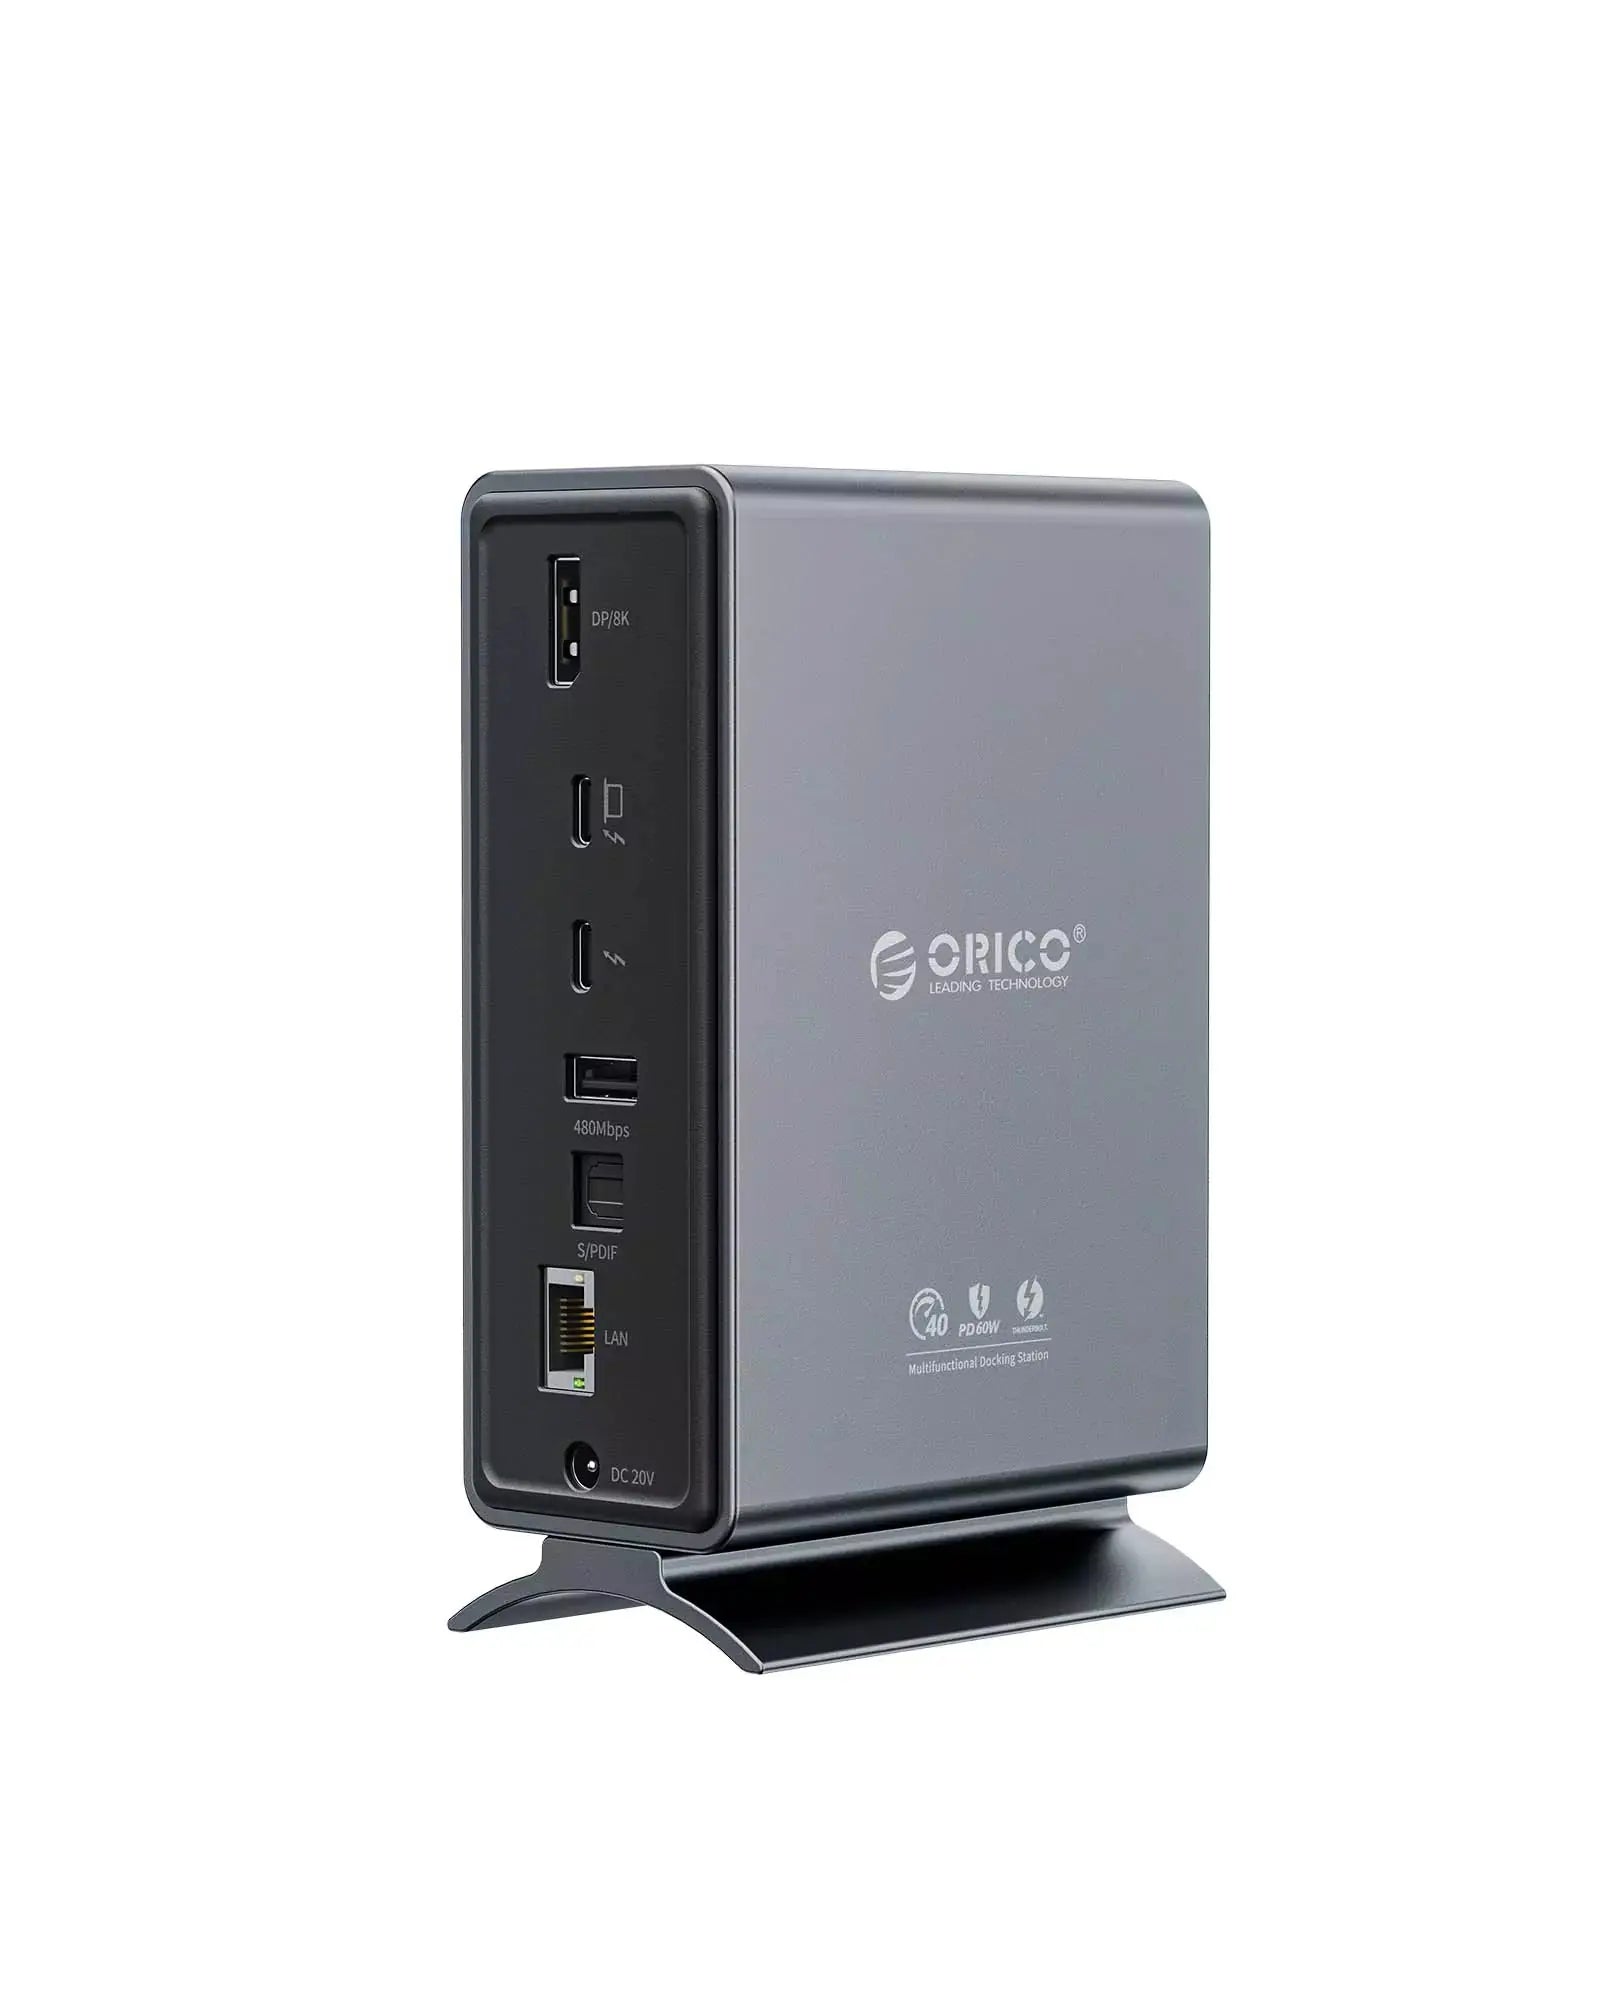 ORICO 40Gbps Thunderbolt 3 Dock USB Type C HUB to 8K DP USB3.0 RJ45 SD4.0  60W Charging Adapter For Macbook Pro